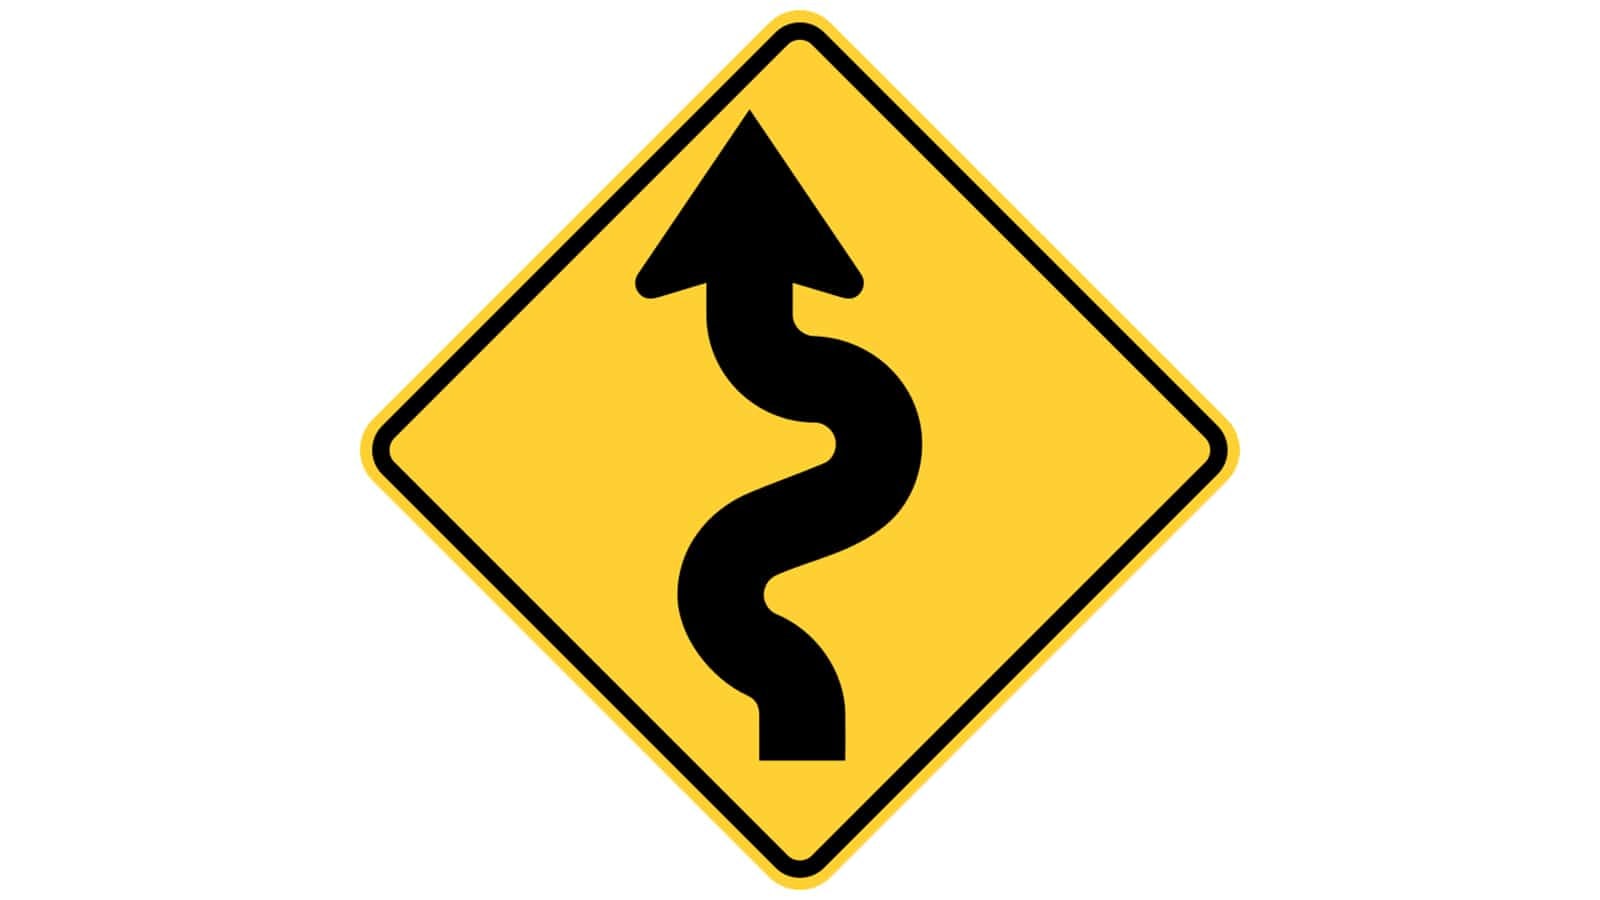 Warning sign winding road